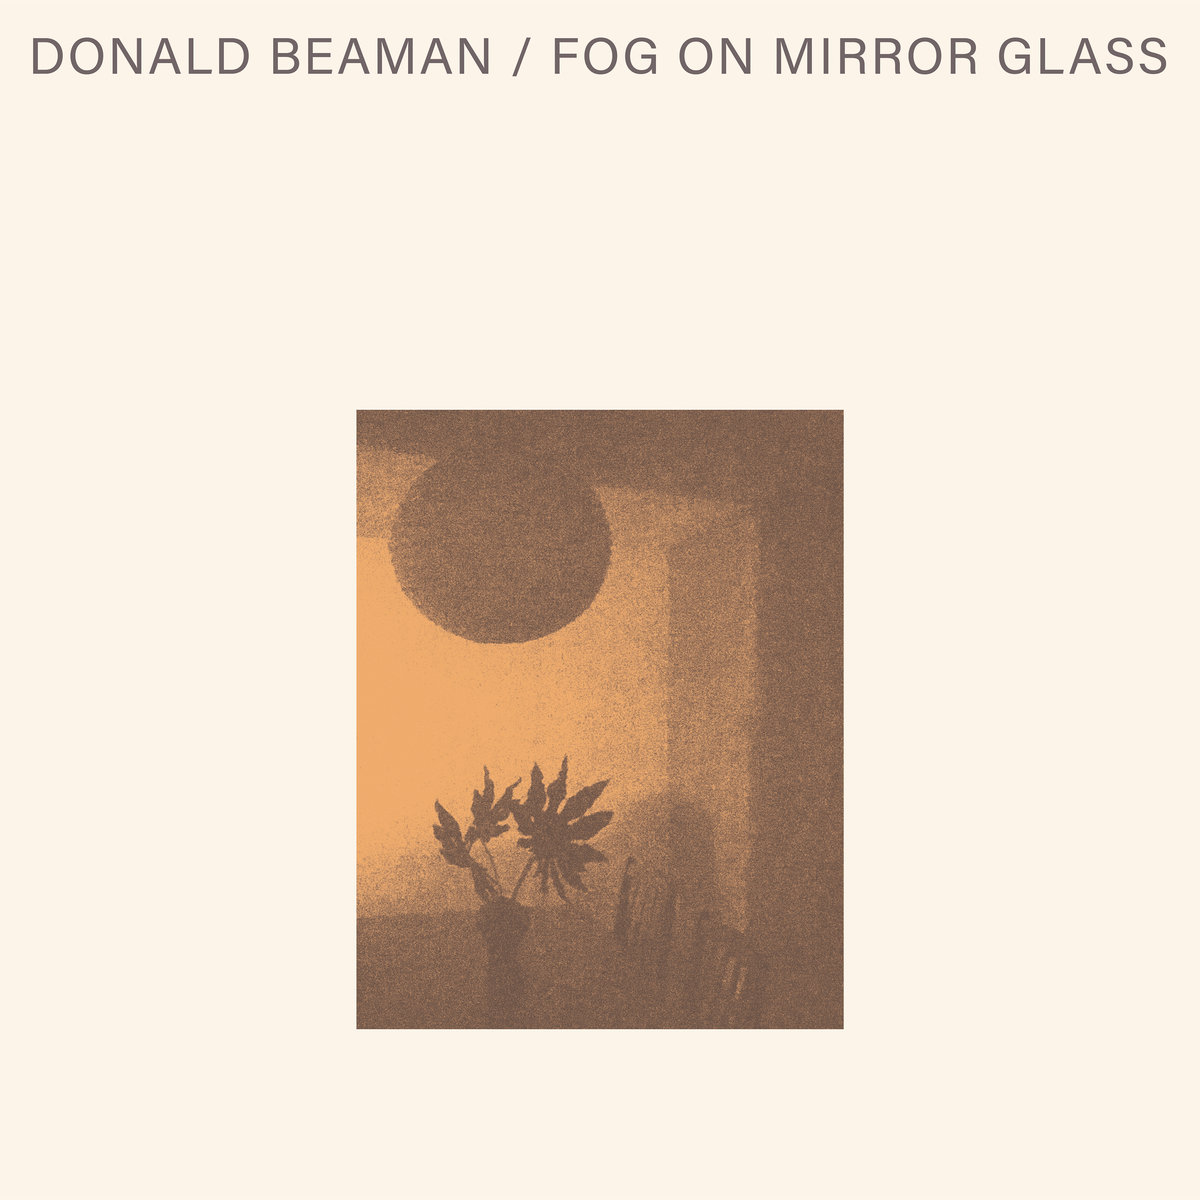 Album: Donald Beaman – Fog On Mirror Glass